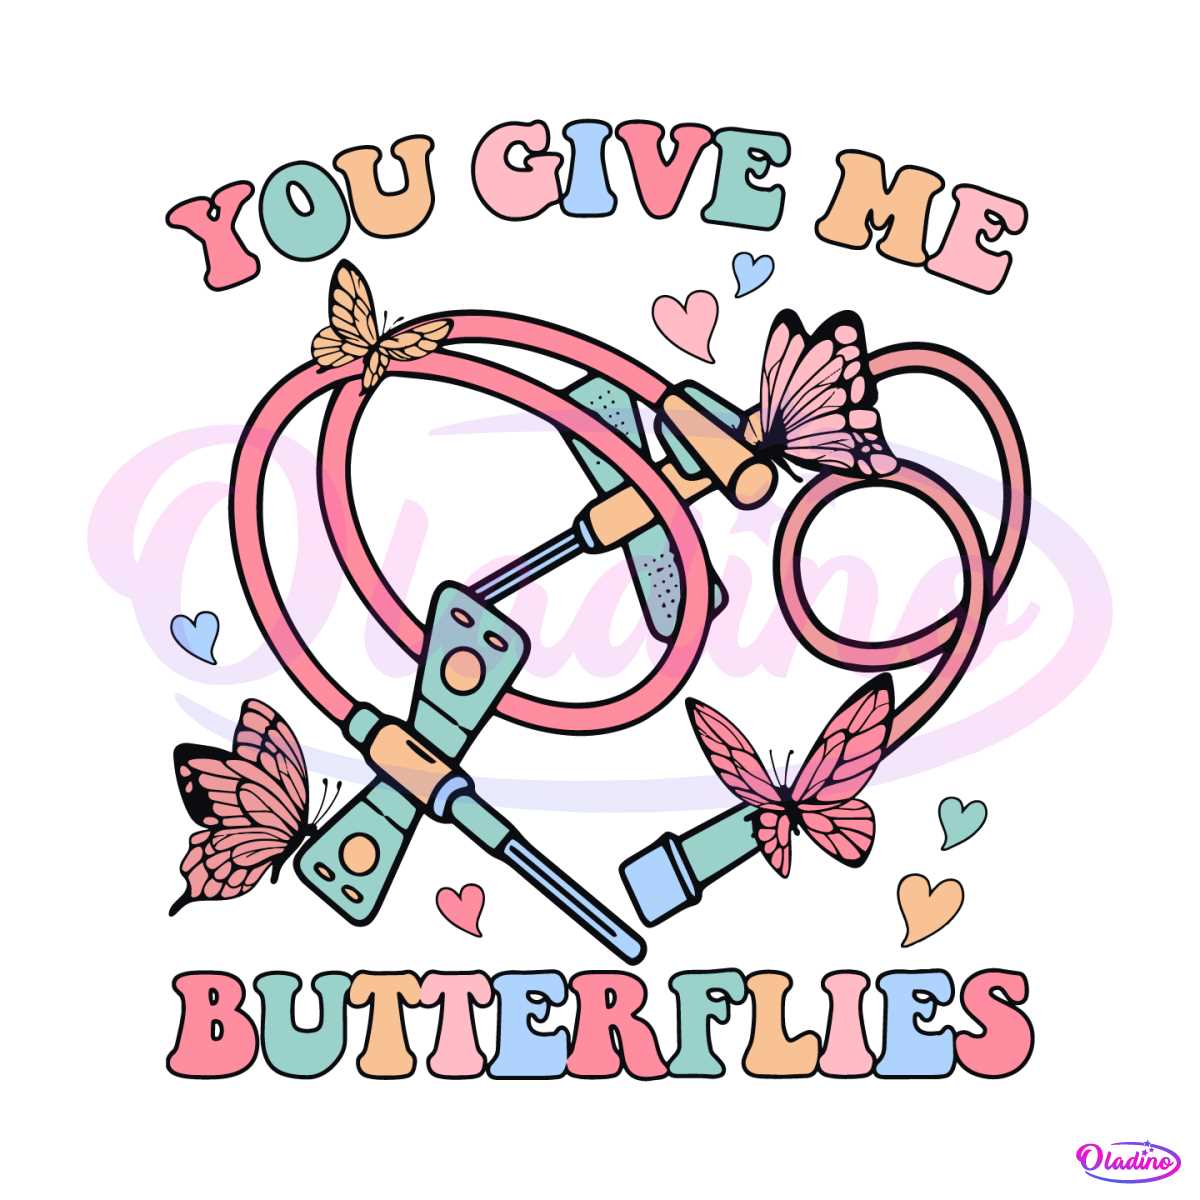 give-me-butterflies-phlebotomist-valentine-svg